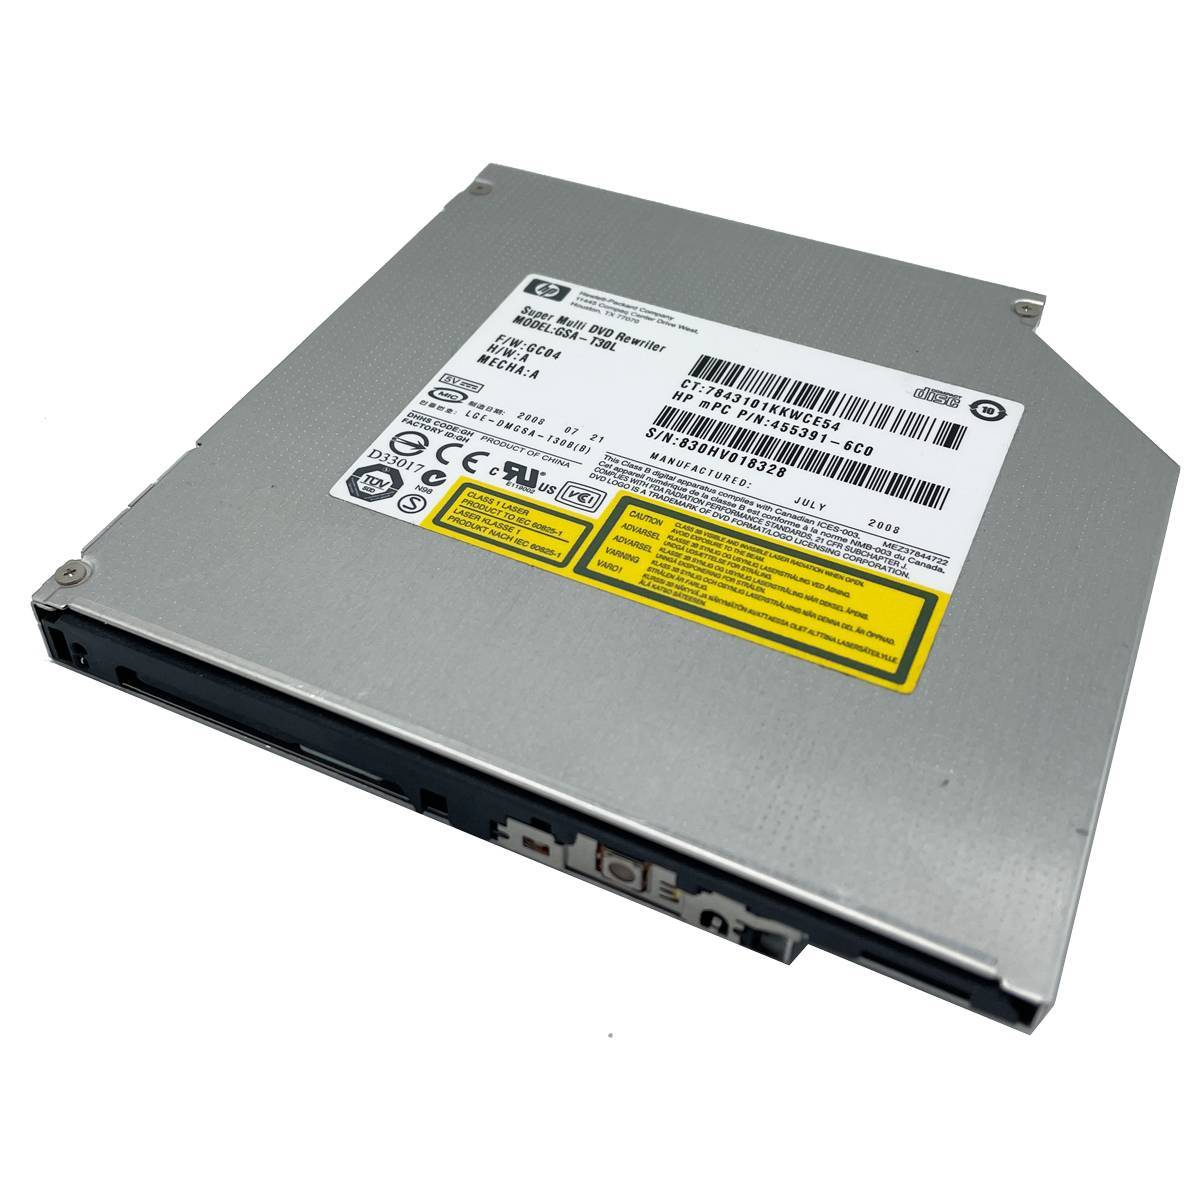 DVD-Brenner HP GSA-T30L slim SATA 12.9mm gebraucht